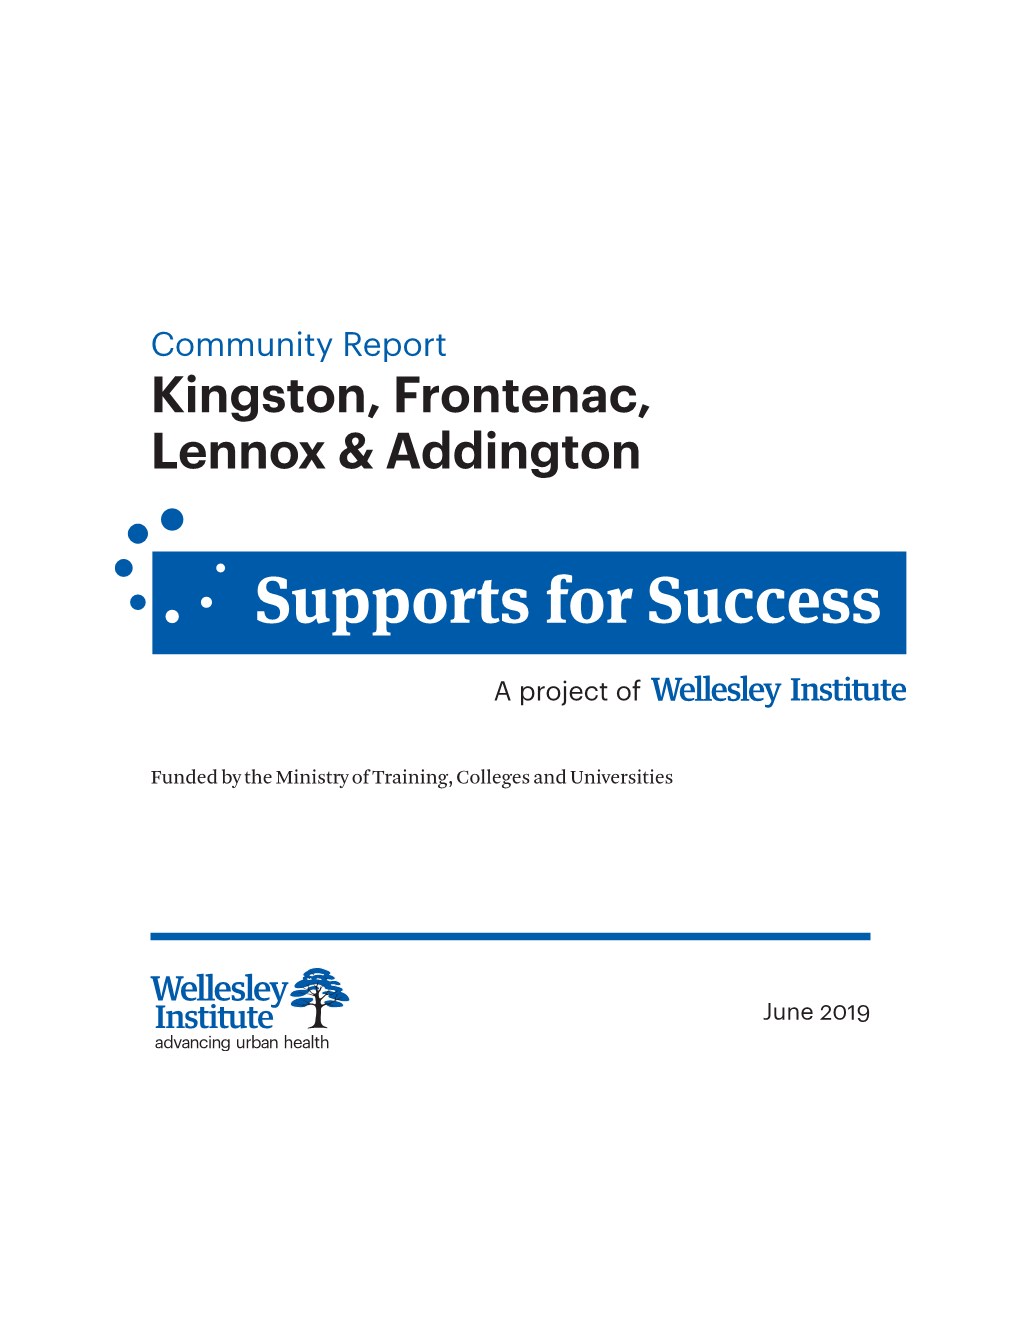 Community Report Kingston, Frontenac, Lennox & Addington